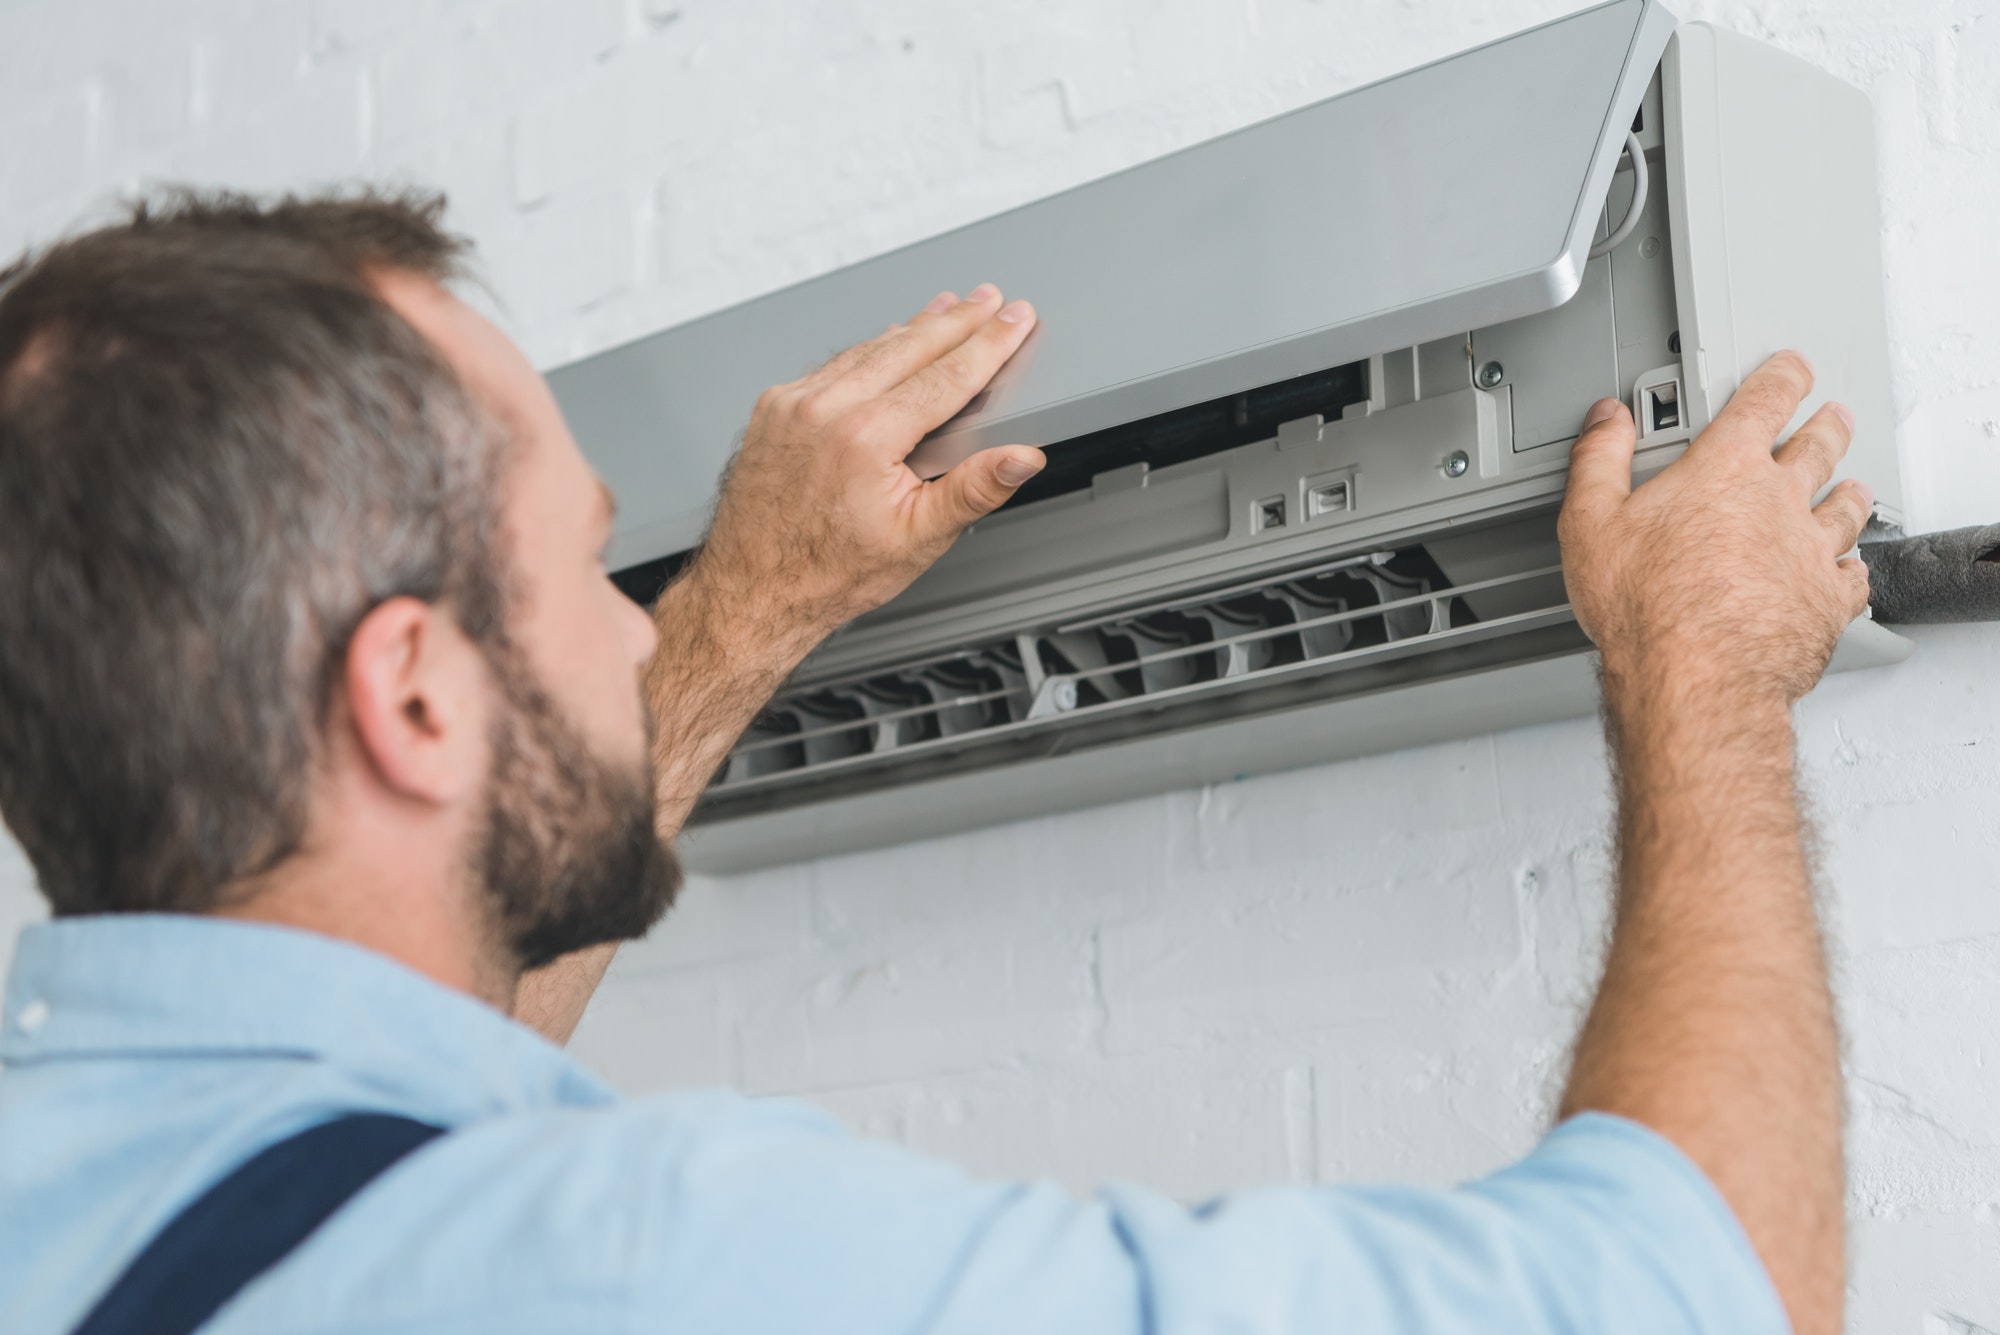 Heating & Air Conditioning Installation & Repair Services - Best Installation, Repair, Maintenance, Service, Replacement Of Heating & Air Conditioning In Brampton, Caledon, Mississauga, Vaughan, Etobicoke, Toronto & Other Cities of GTA